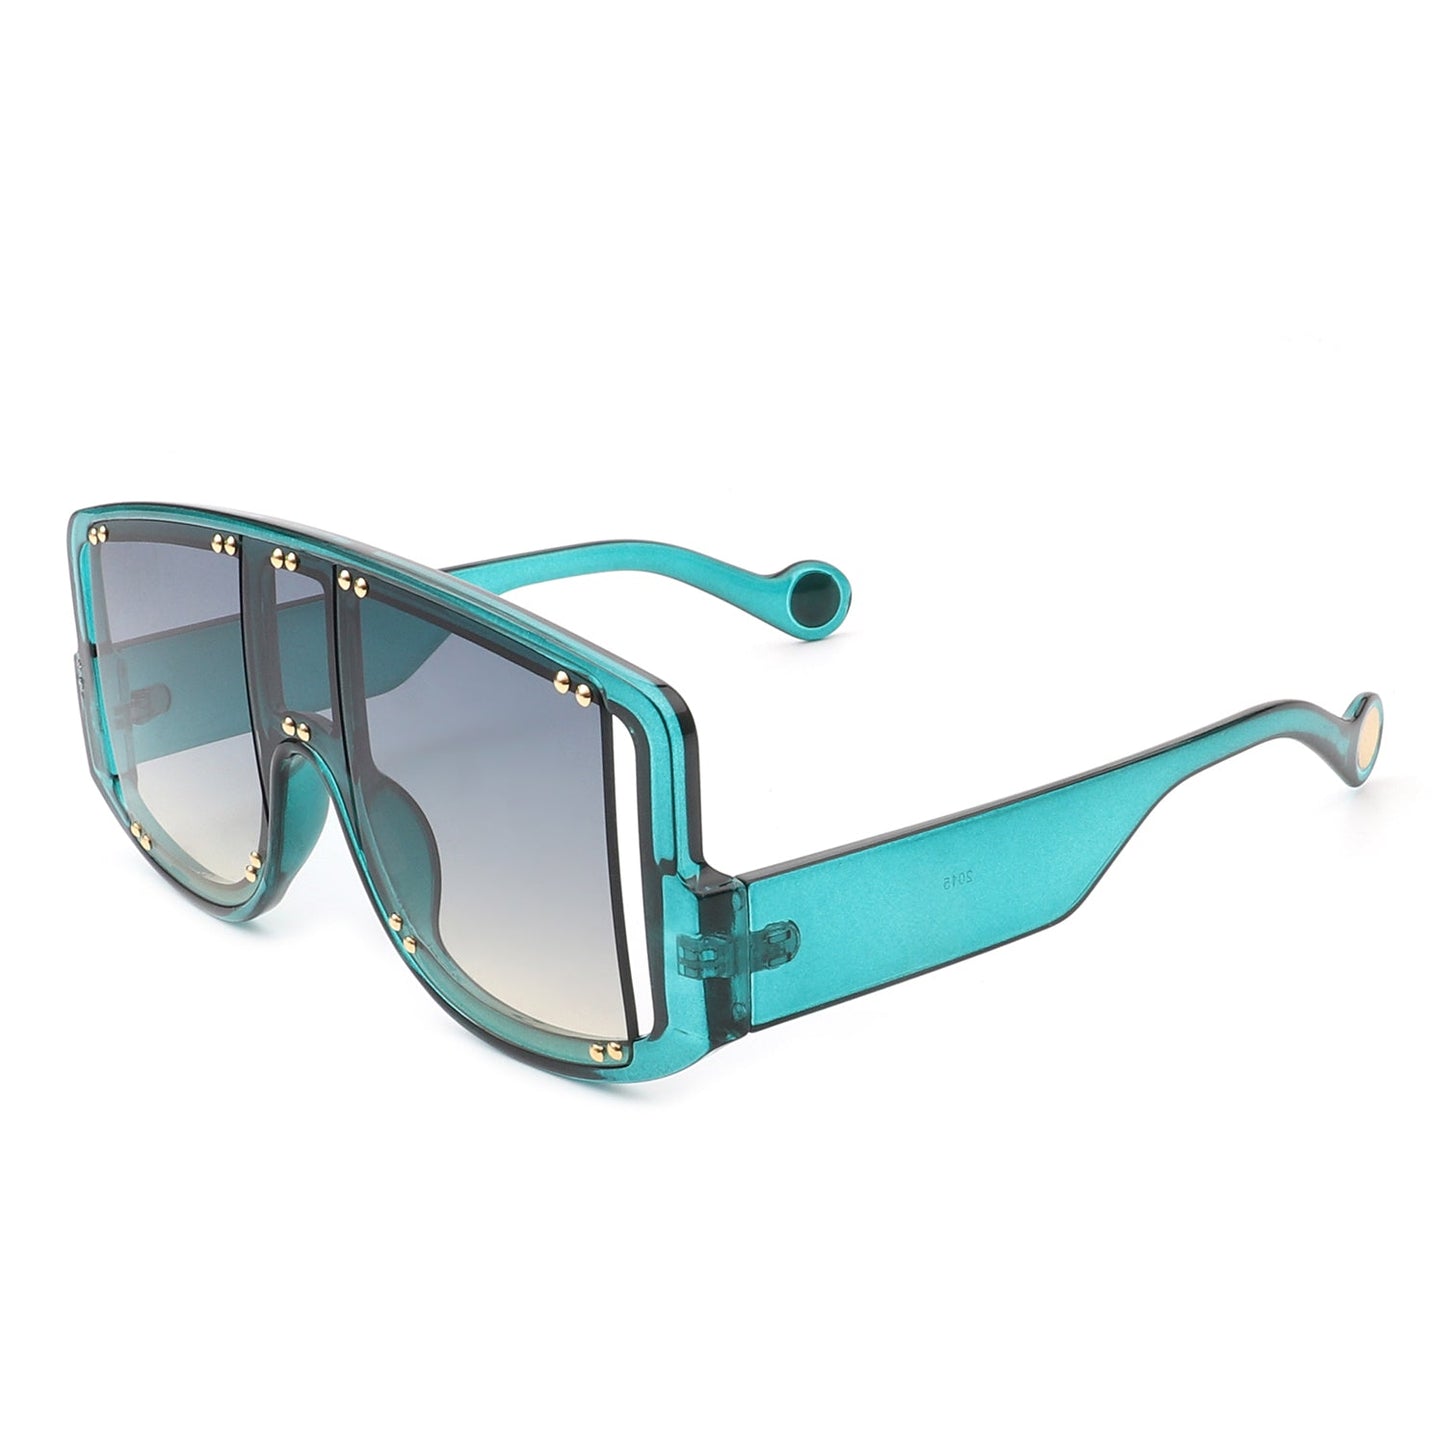 Square aviator sunglasses